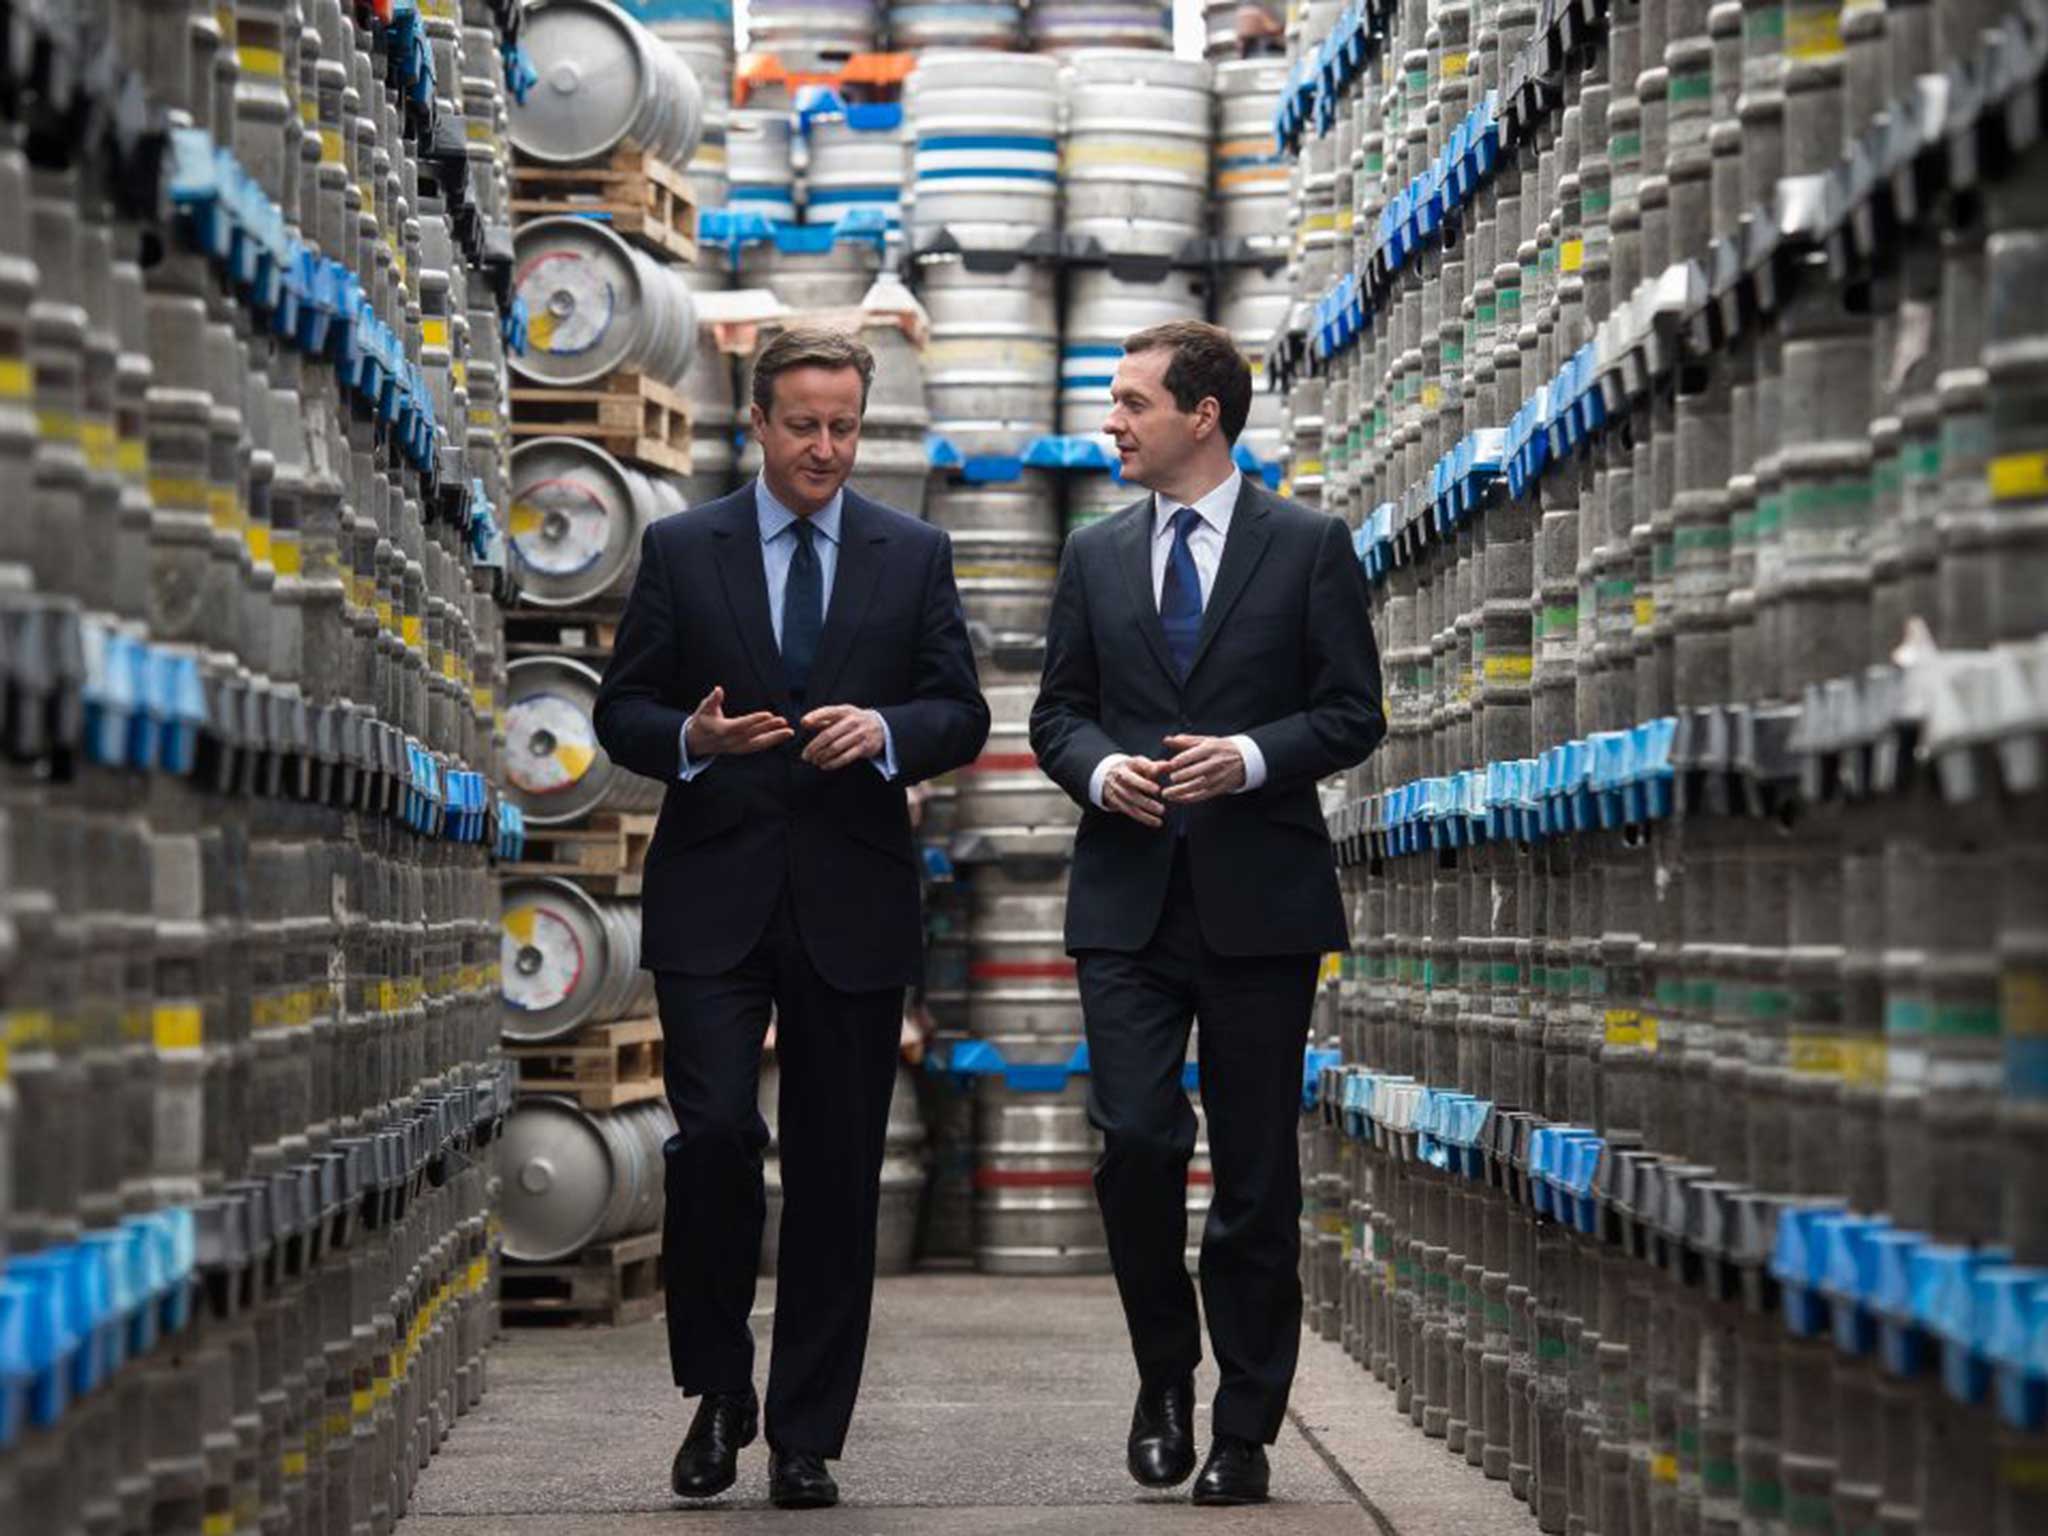 David Cameron and George Osborne visit the Marston's Brewery